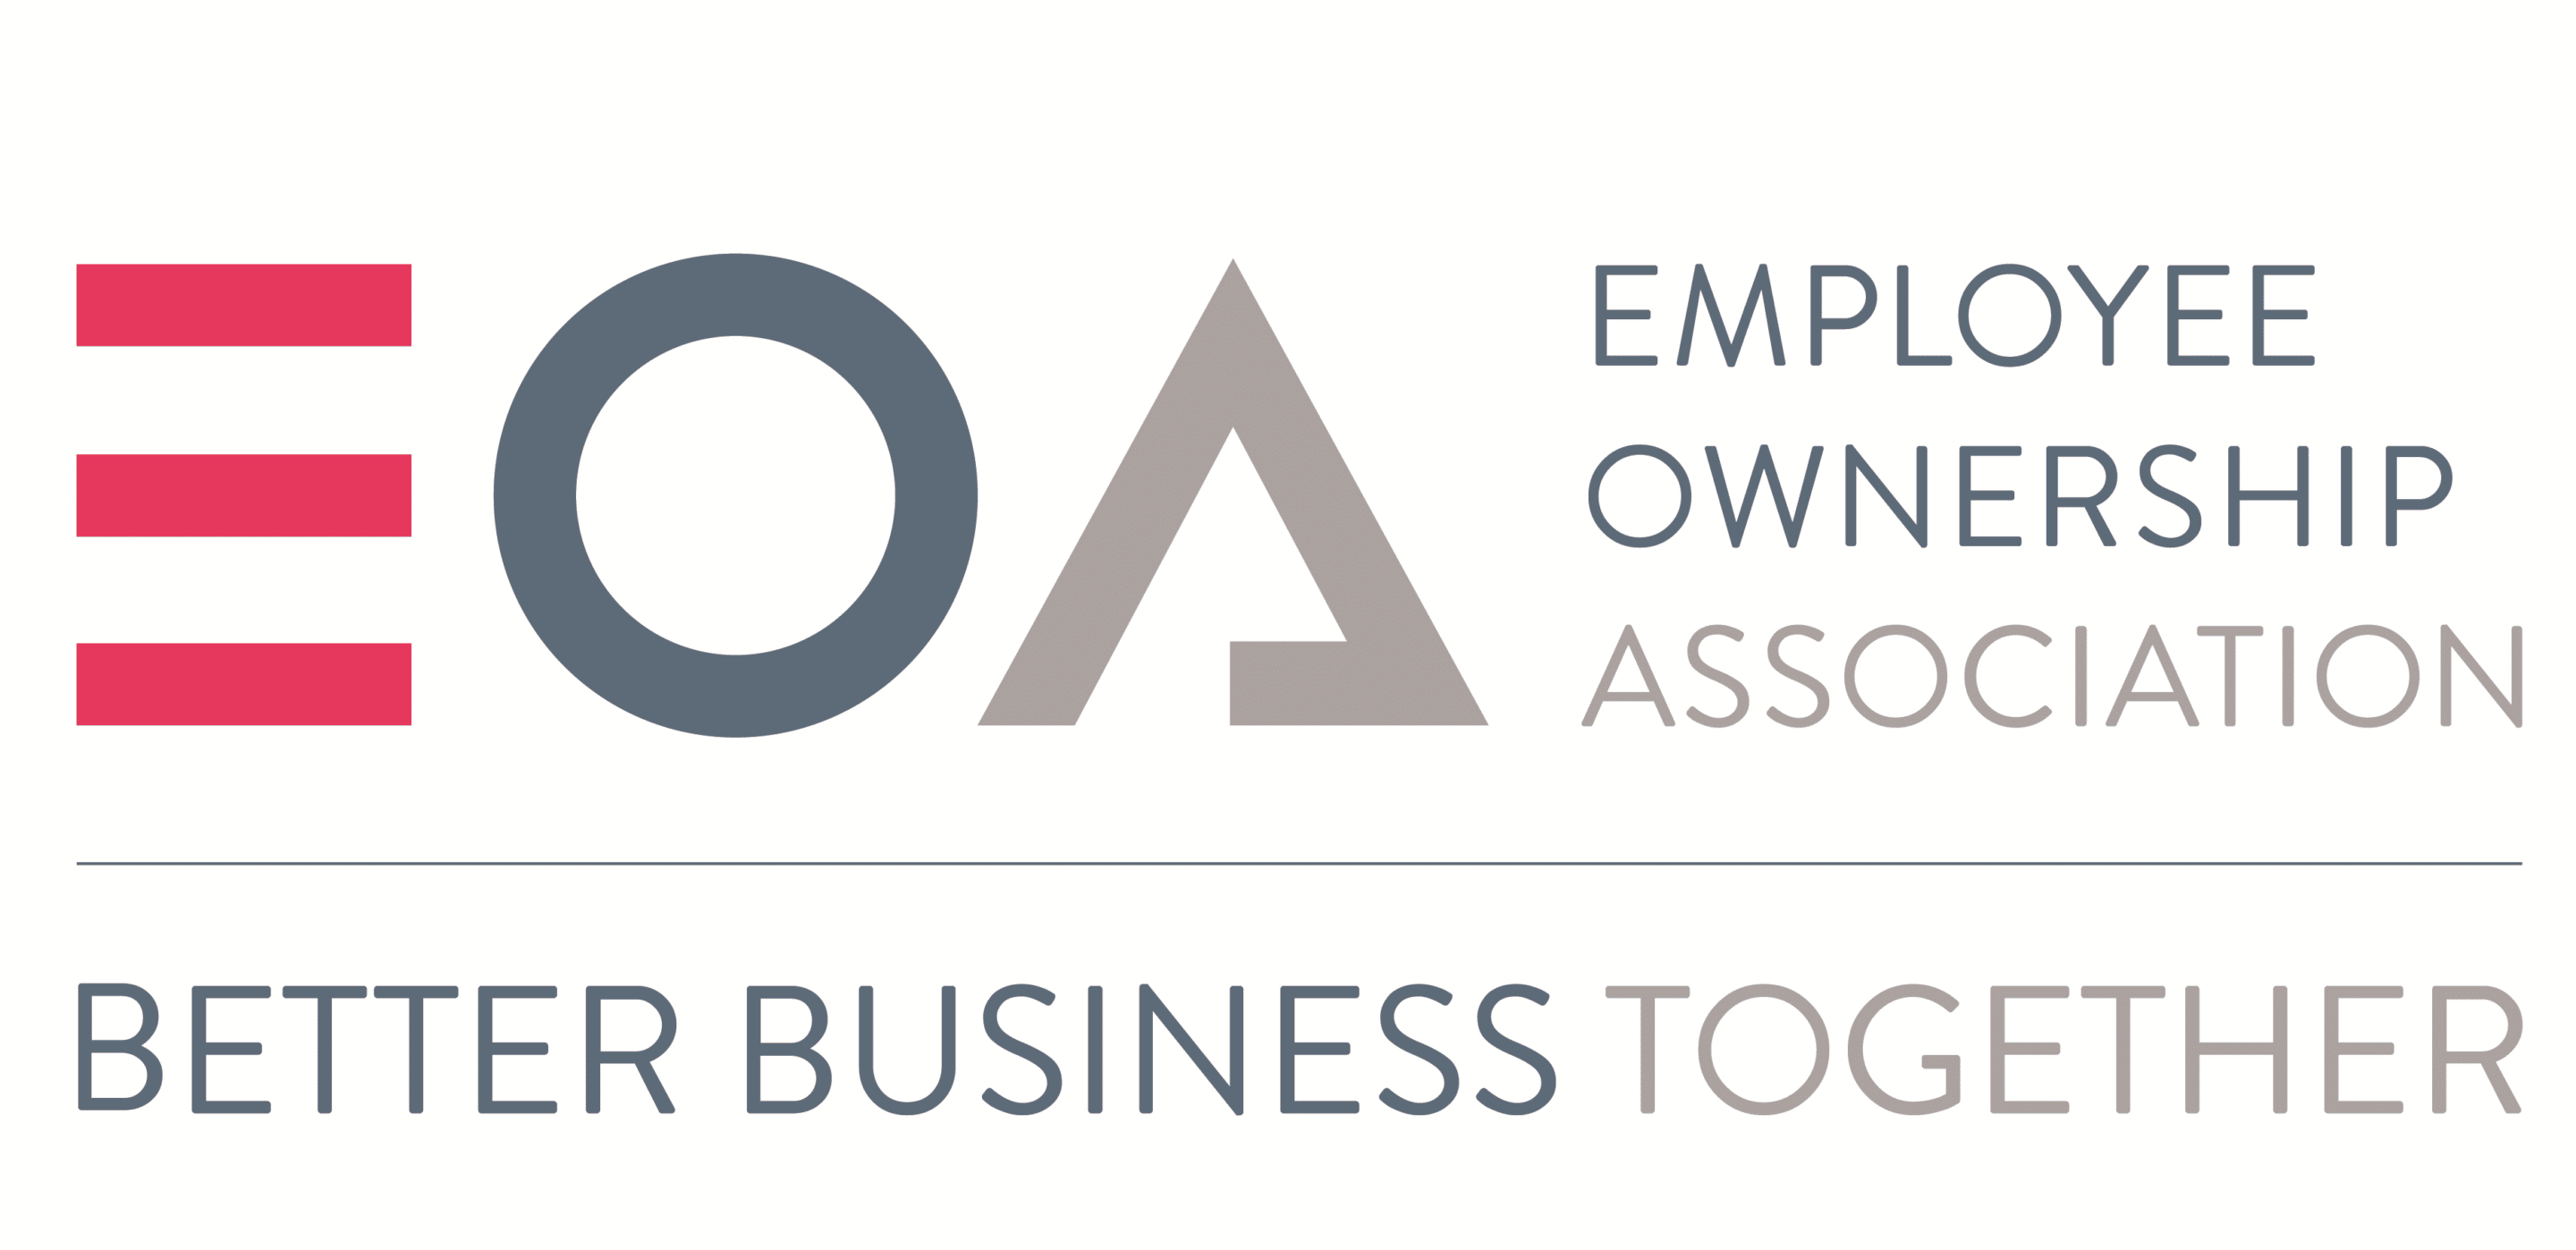 Employee ownership association